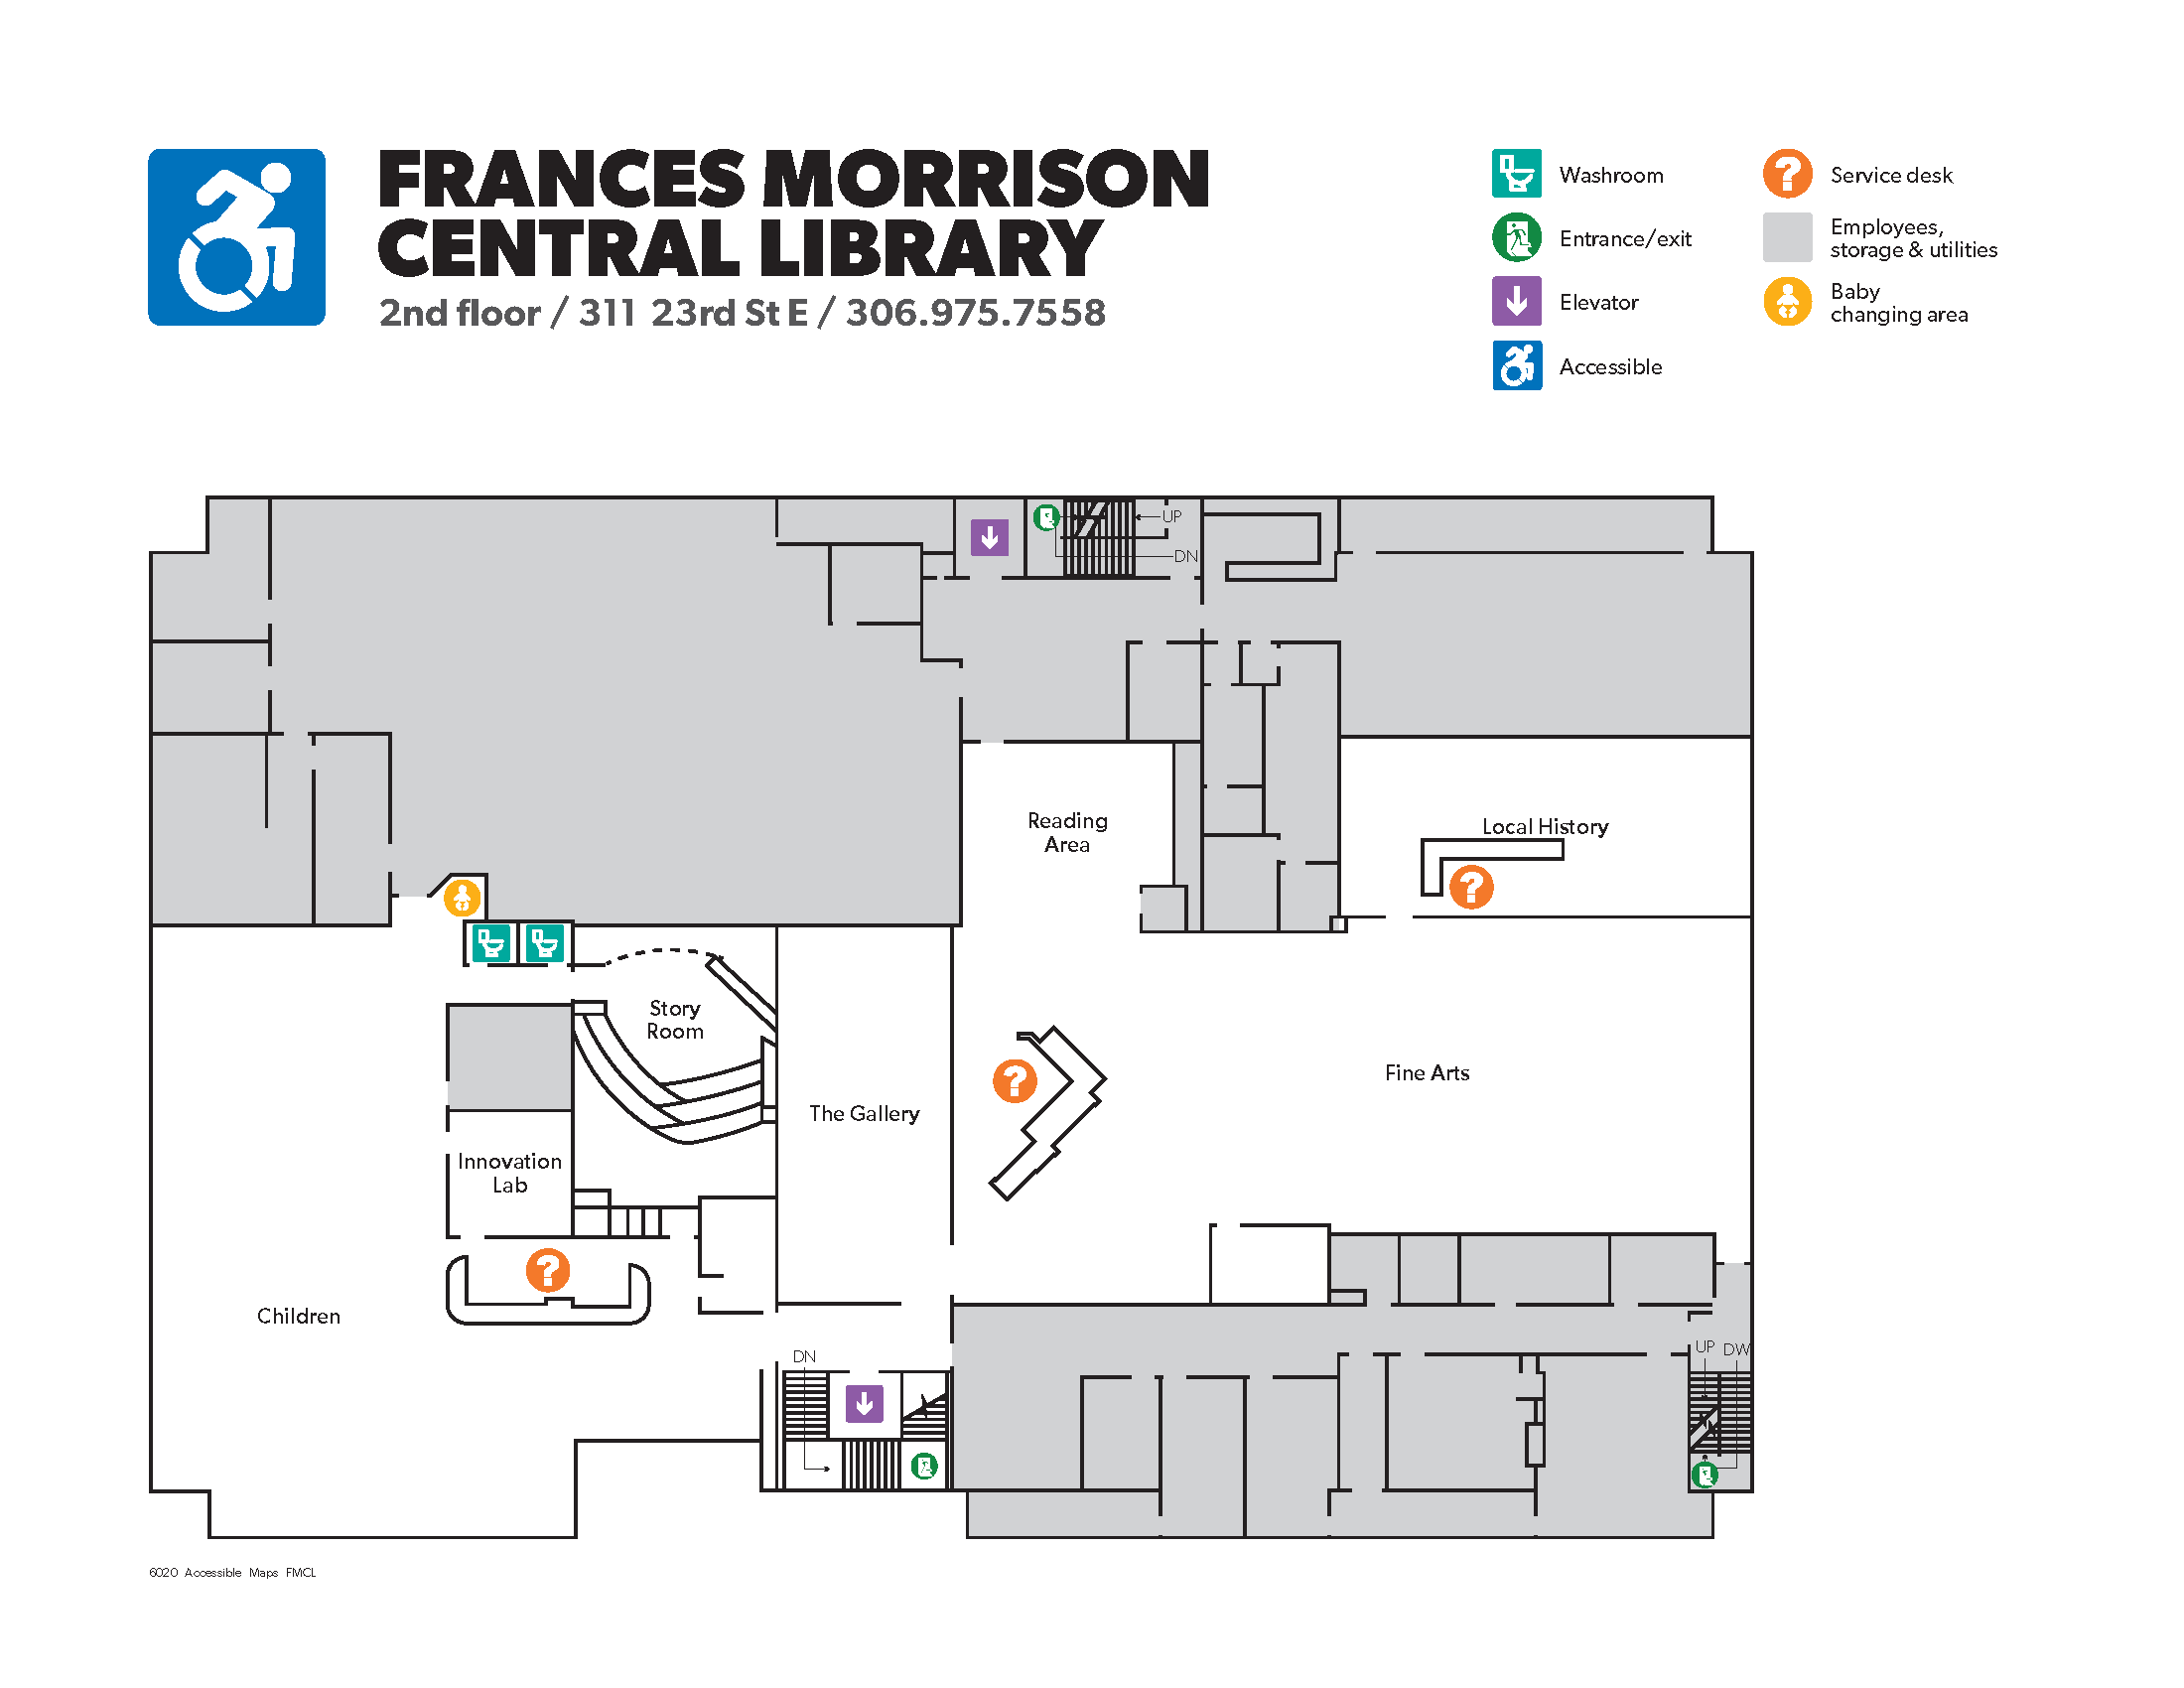 Frances Morrison second floor floor plan